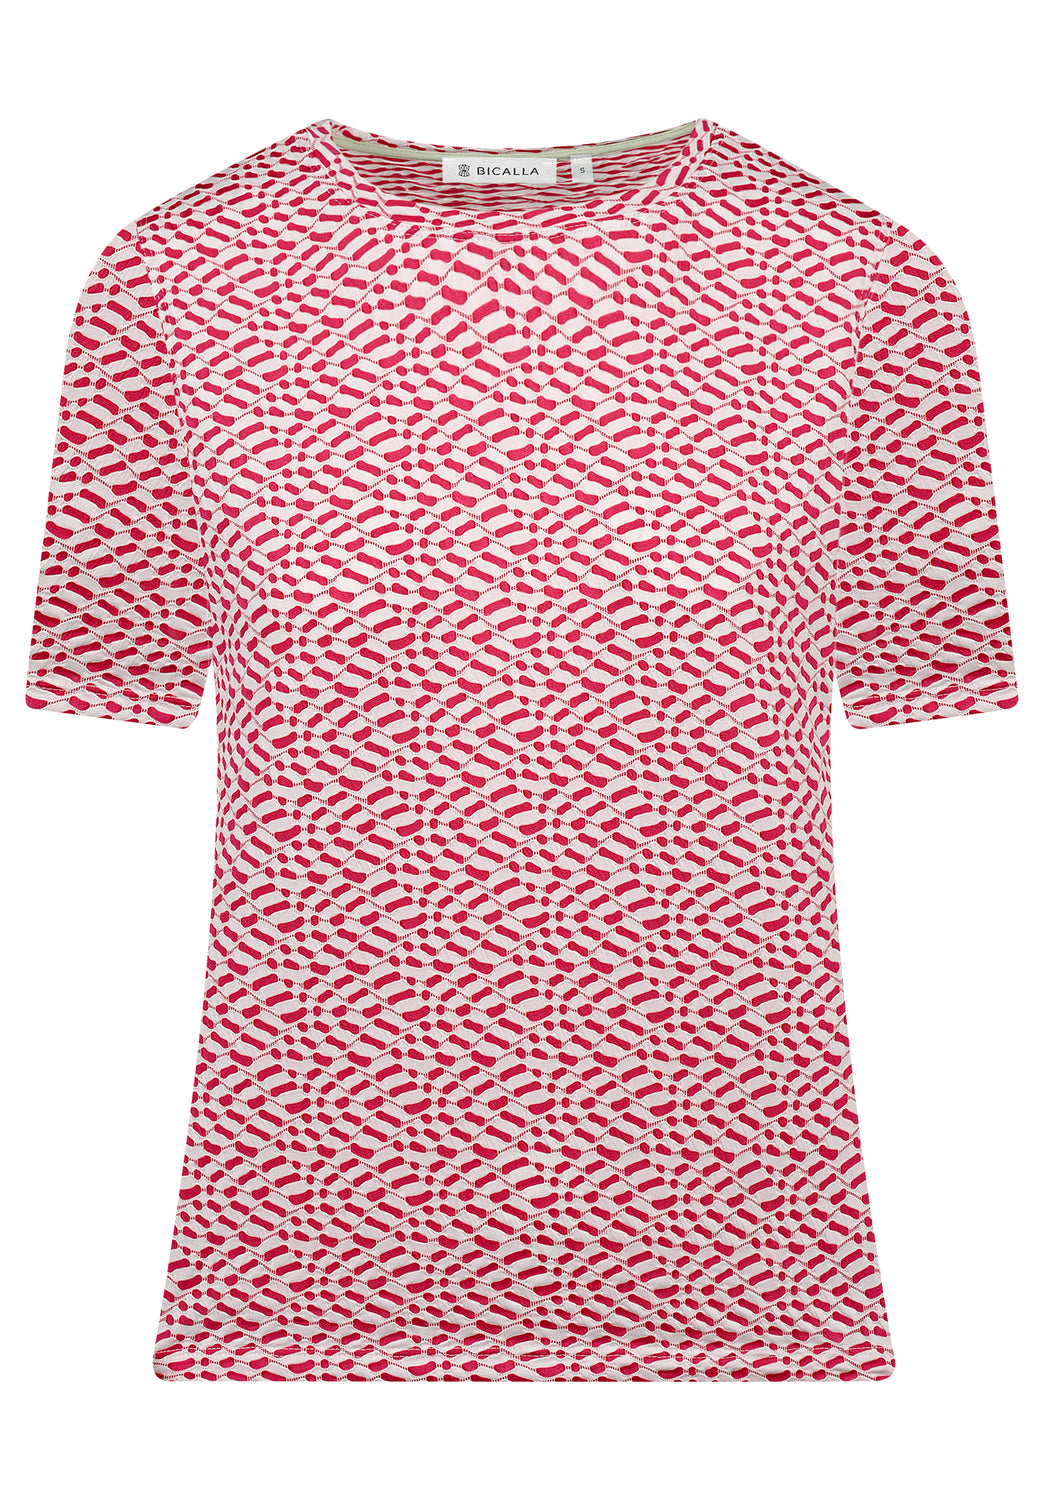 24201 Overhemd Structuur - 09/roze-wit